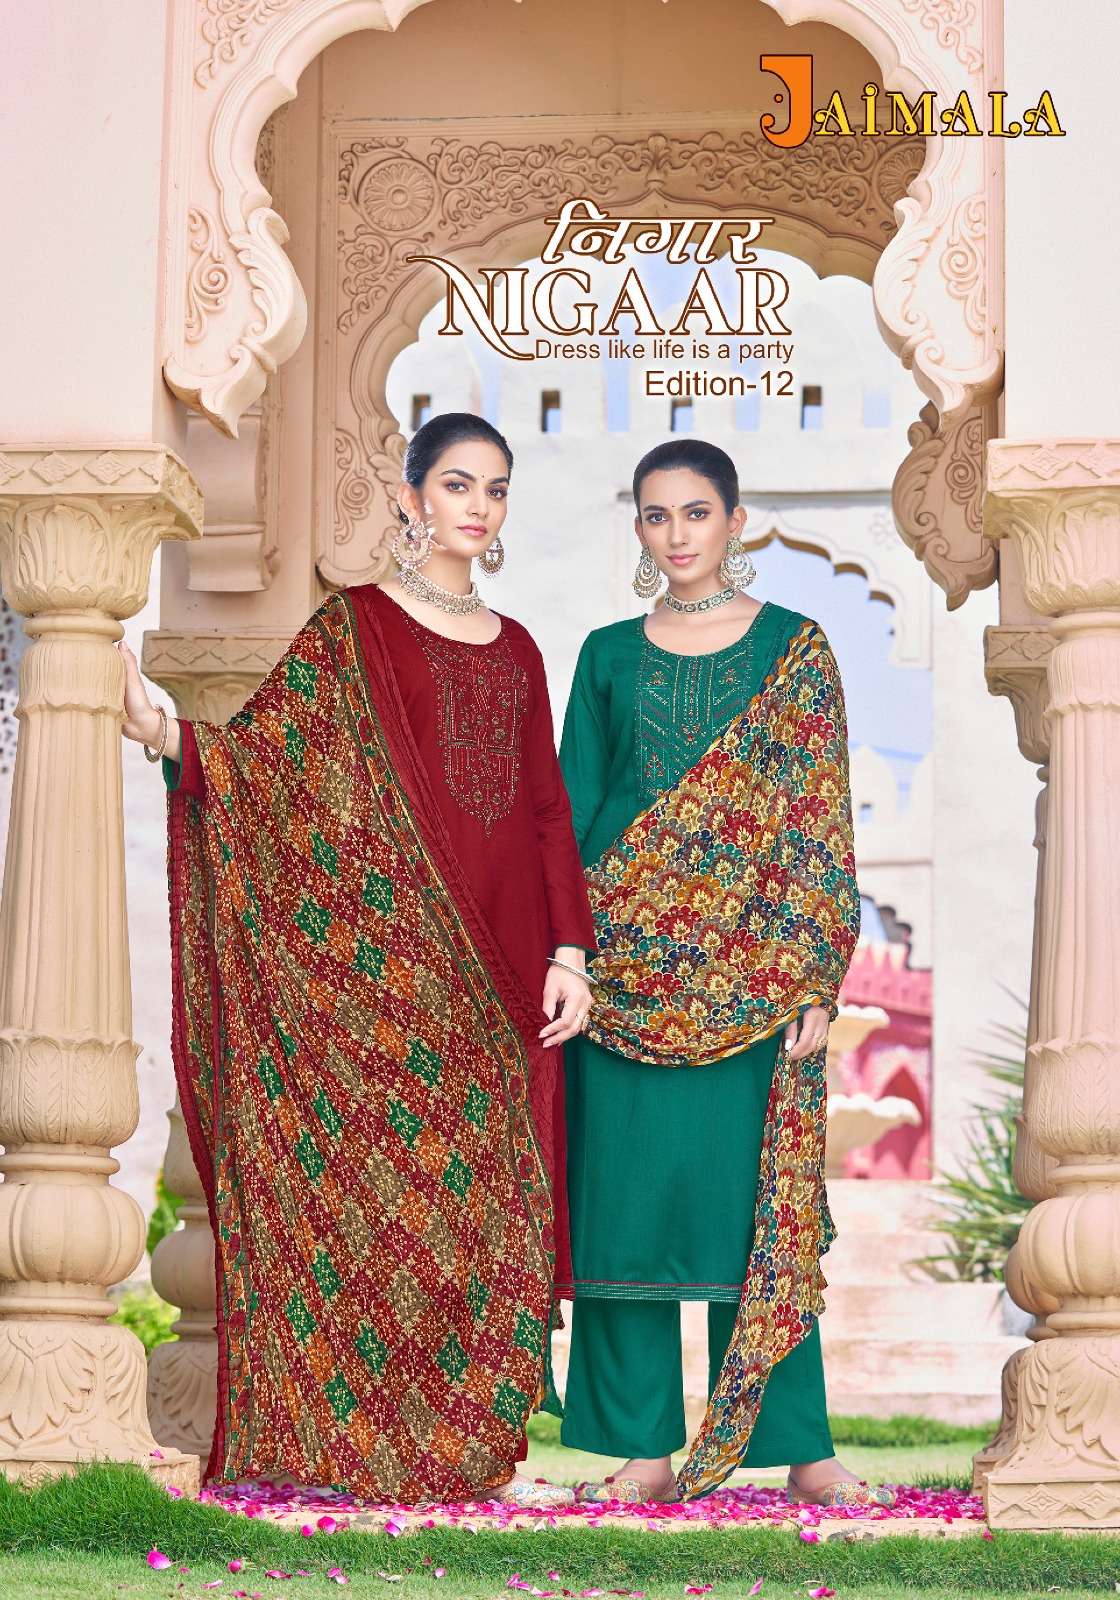 nigaar vol 12 jaimala by alok suit rayon salwar kameez with bandhej print dupatta